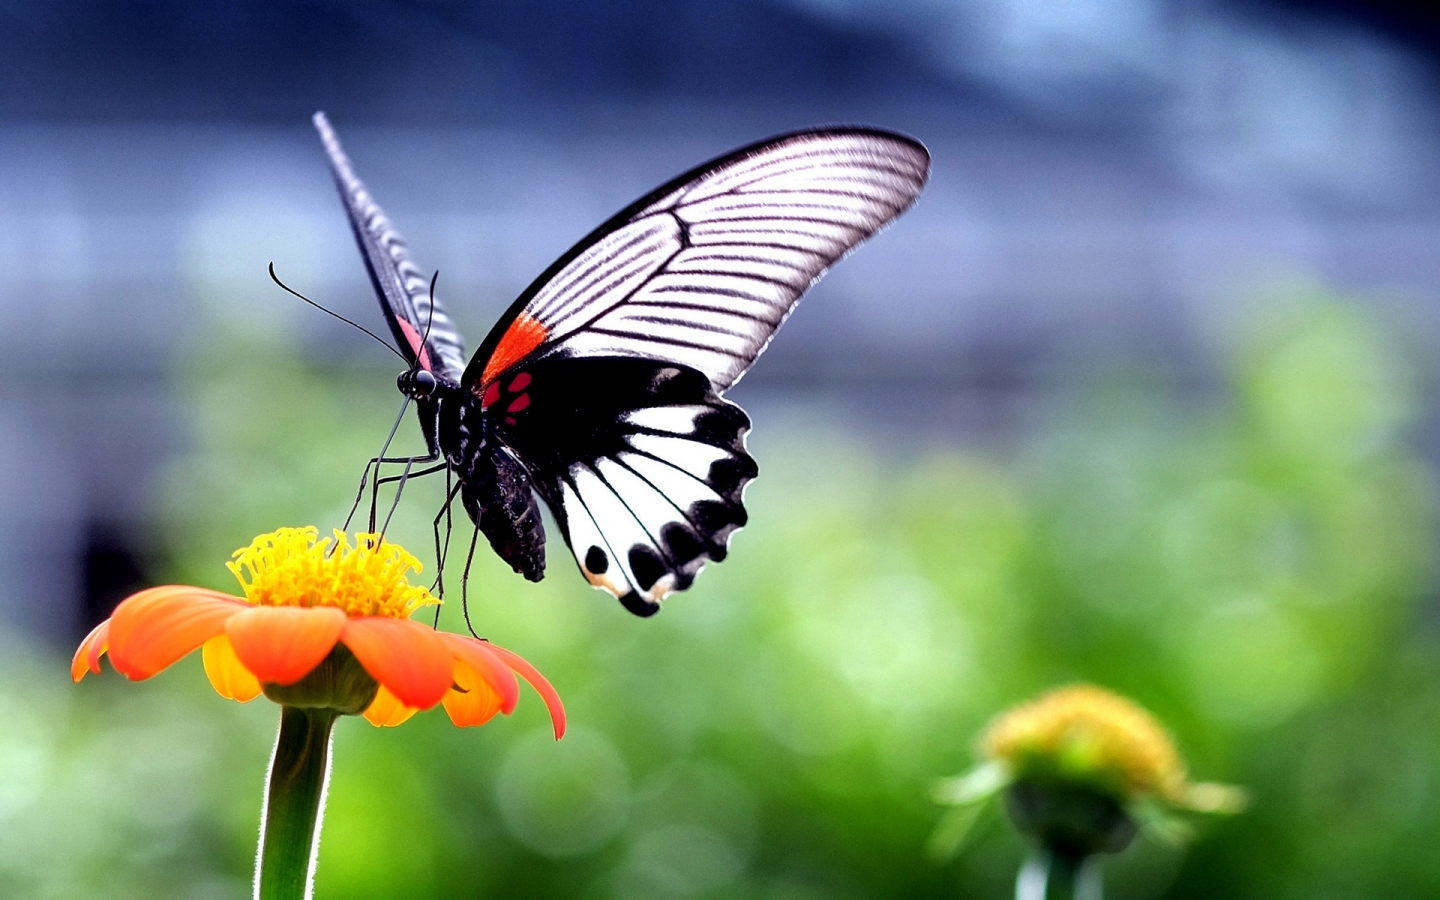 Beautiful Butterfly on Orange Flower for 1440 x 900 widescreen resolution